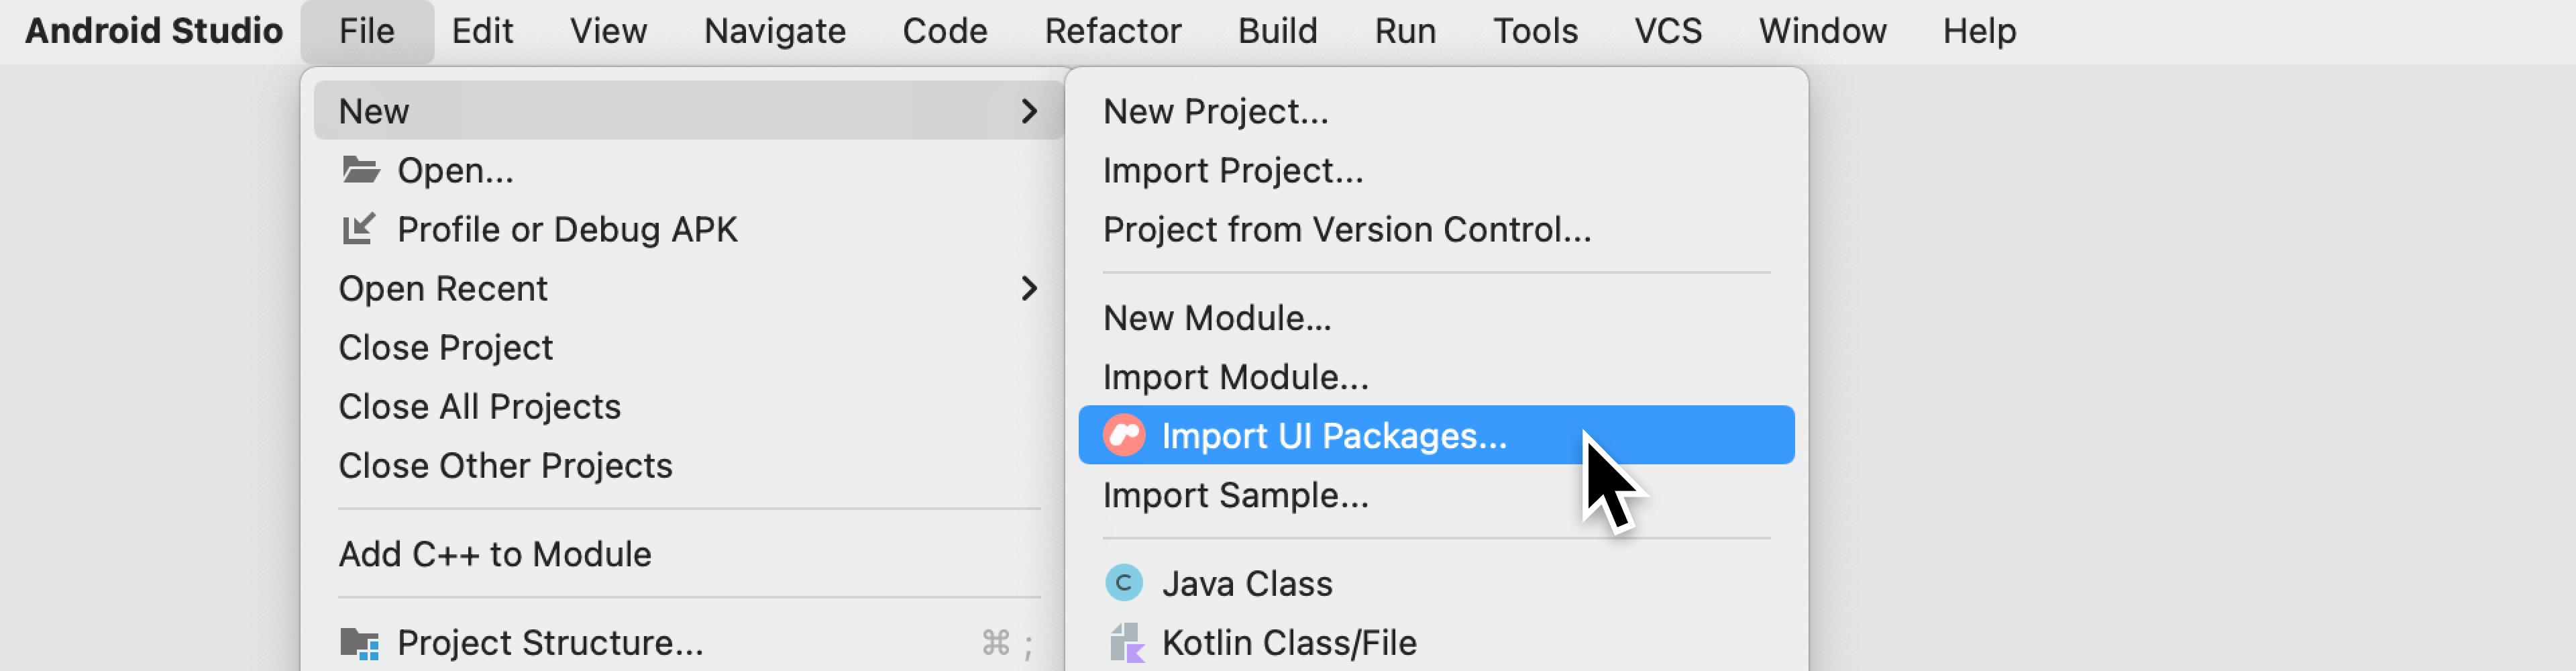 Import UI Packages… option under the File menu